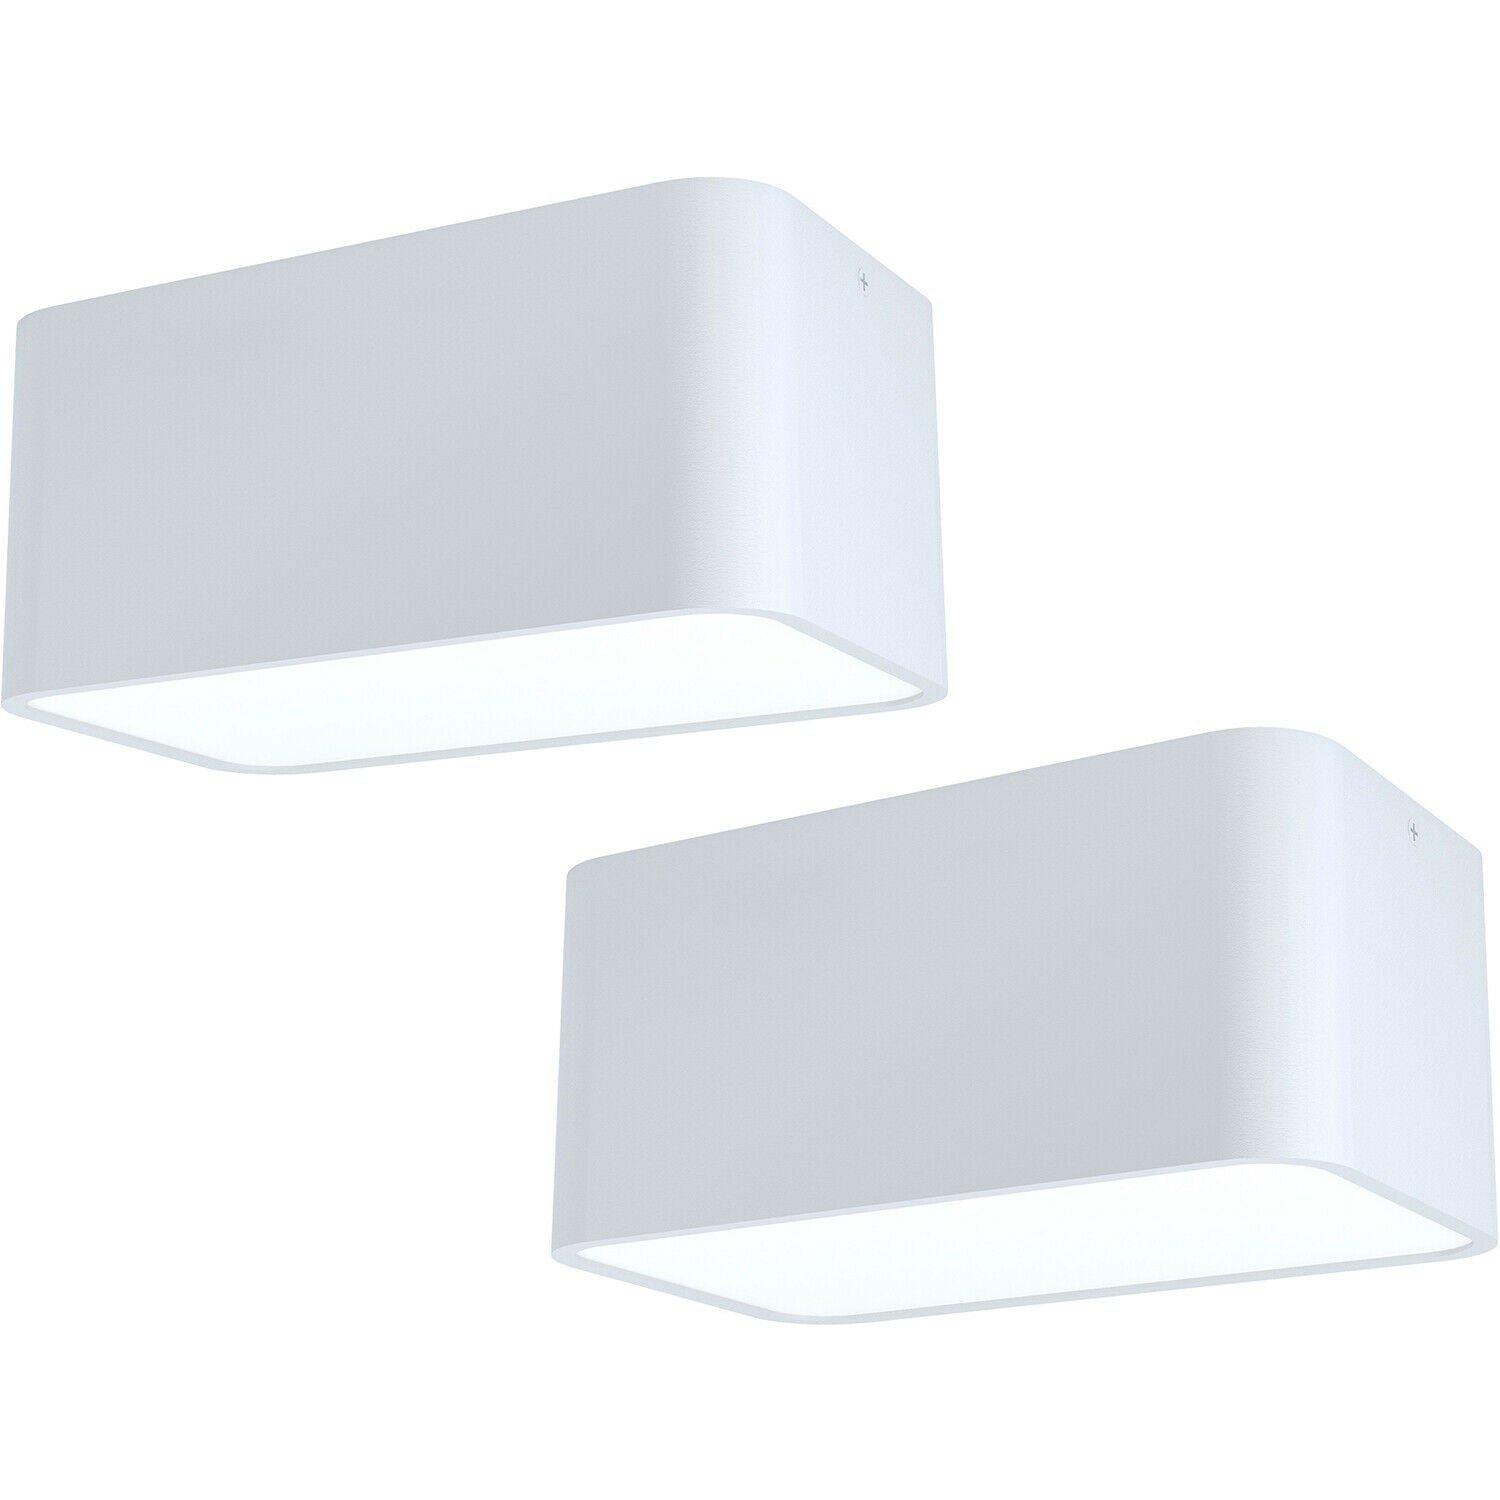 2 PACK Wall / Ceiling Light White Aluminium Twin Downlight 1x 28W E27 Bulb